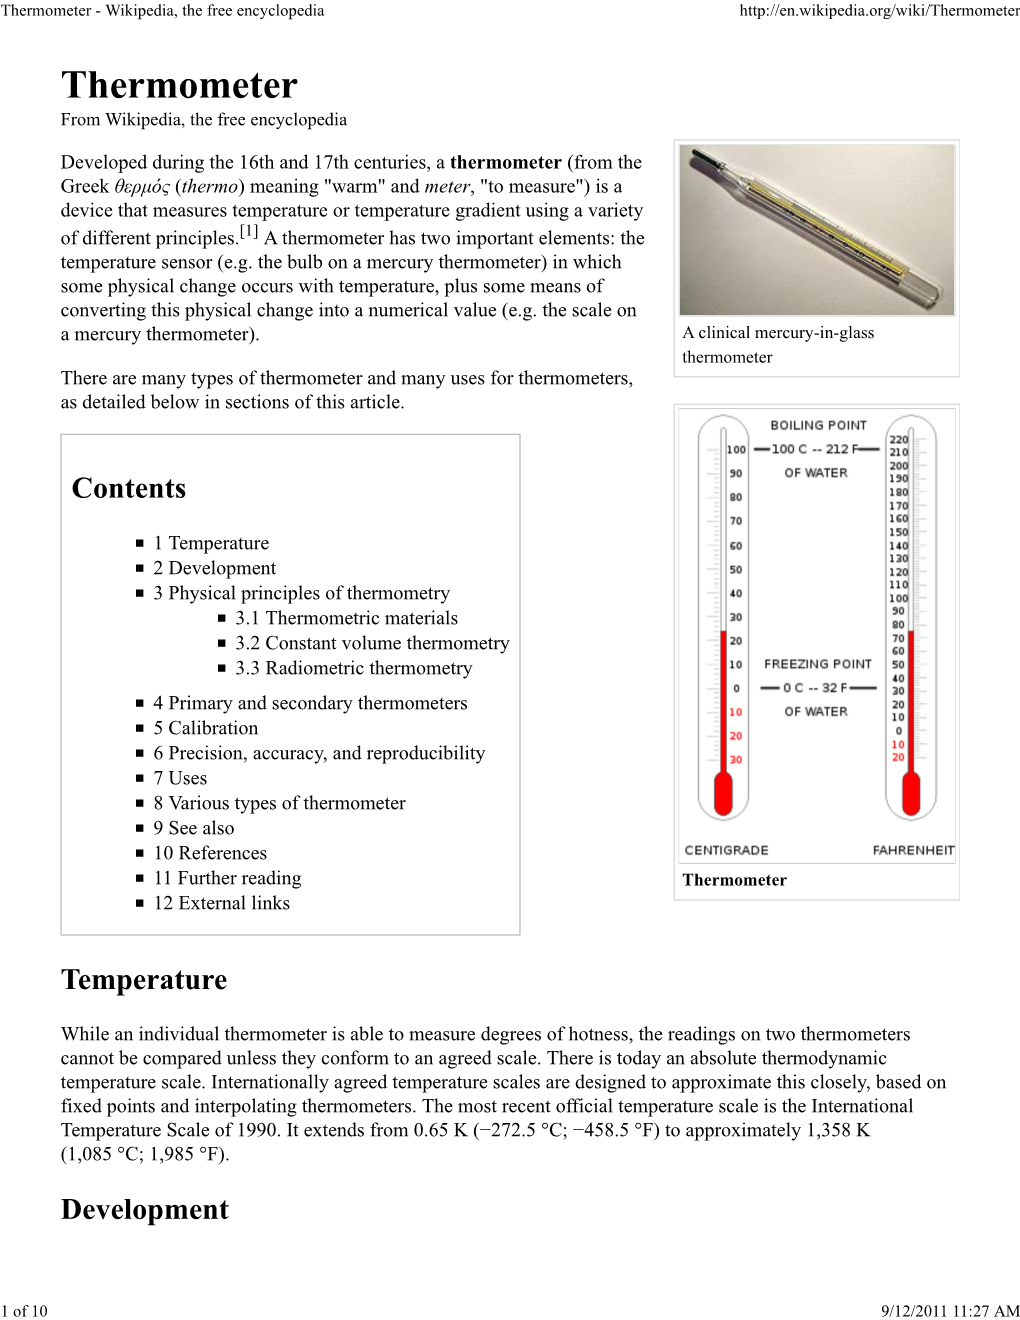 Thermometer - Wikipedia, the Free Encyclopedia